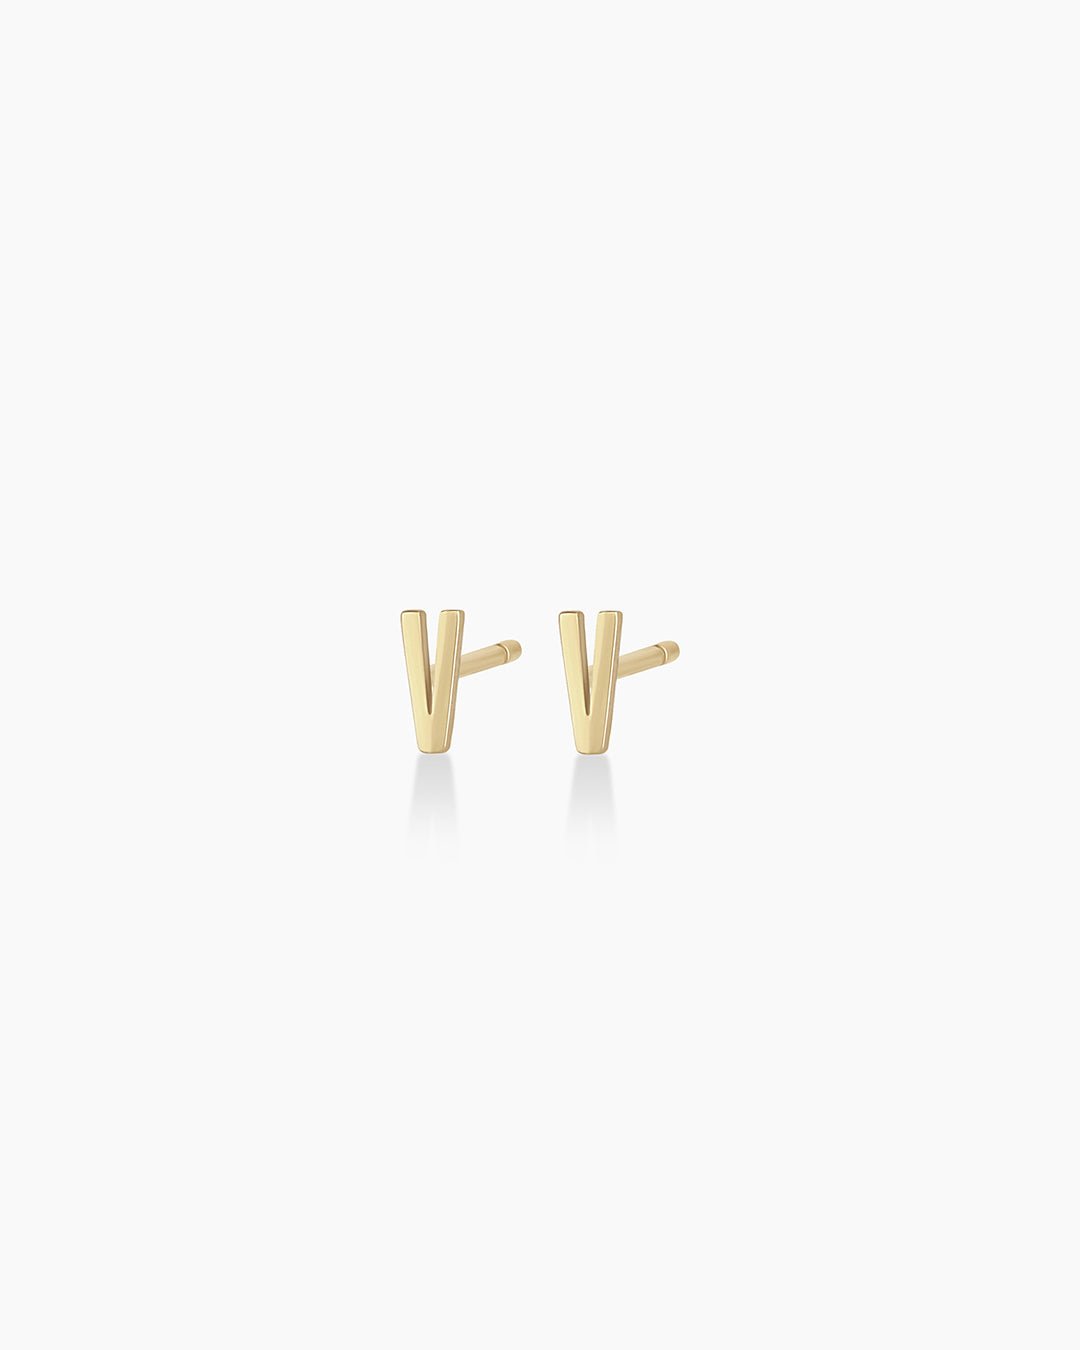 Alphabet earring stud || option::14k Solid Gold, V, Pair